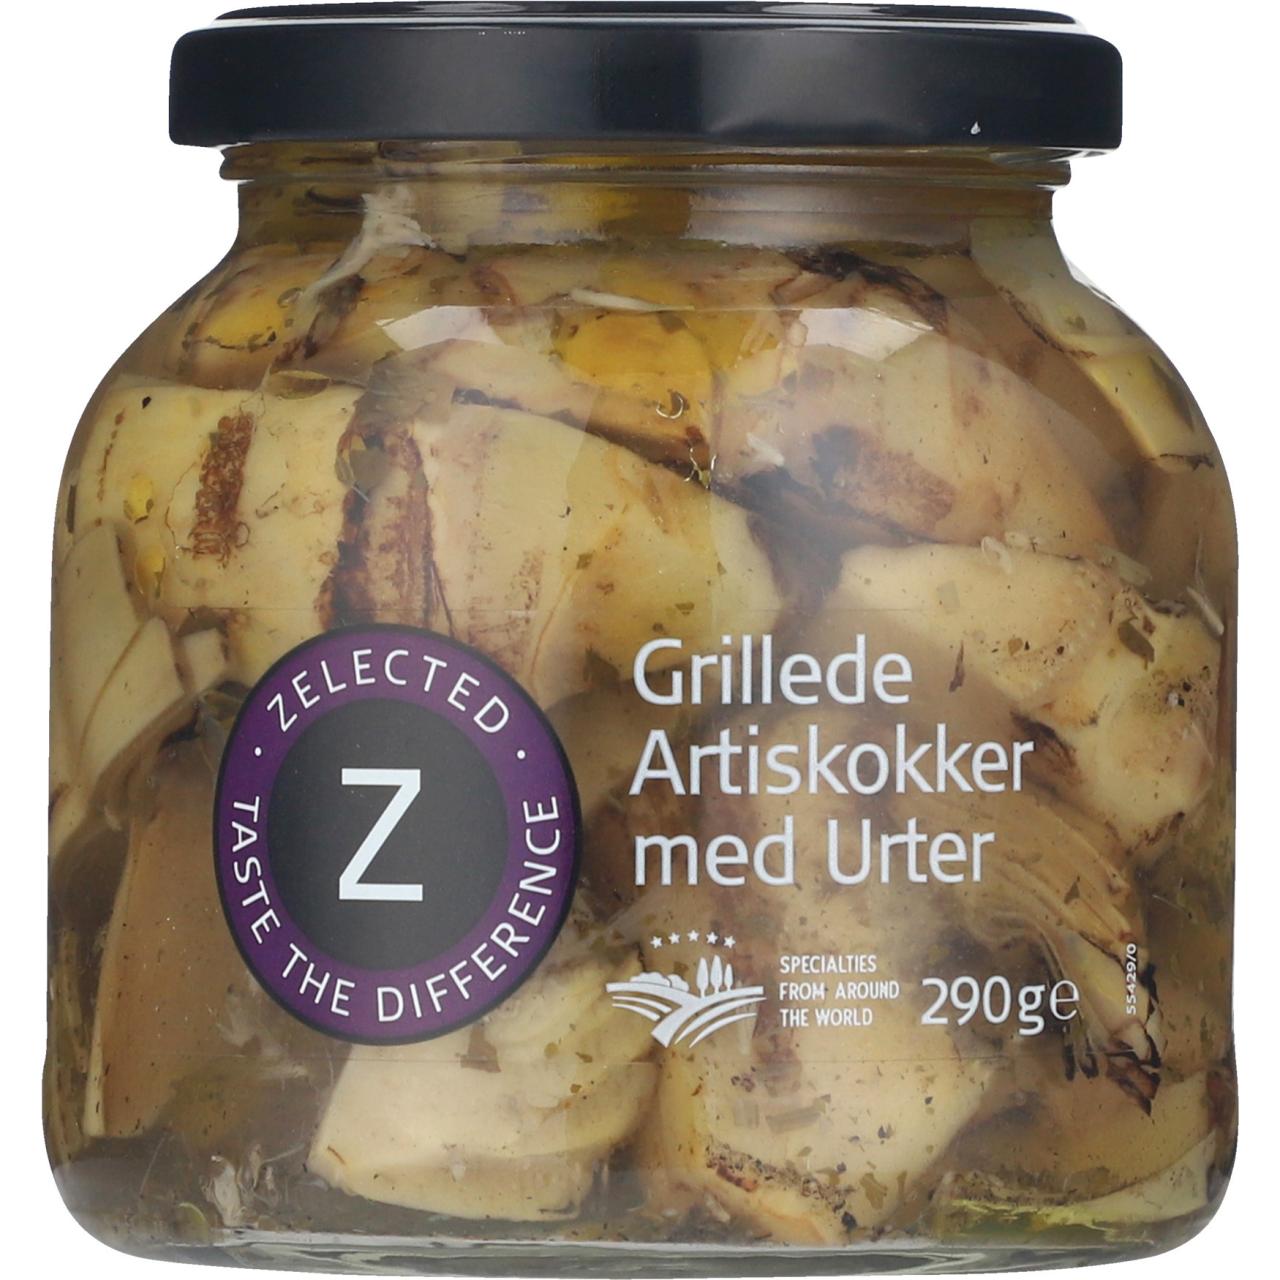 Z Grillede Artiskokker med Urter/Gegrillte Artischocken 290g